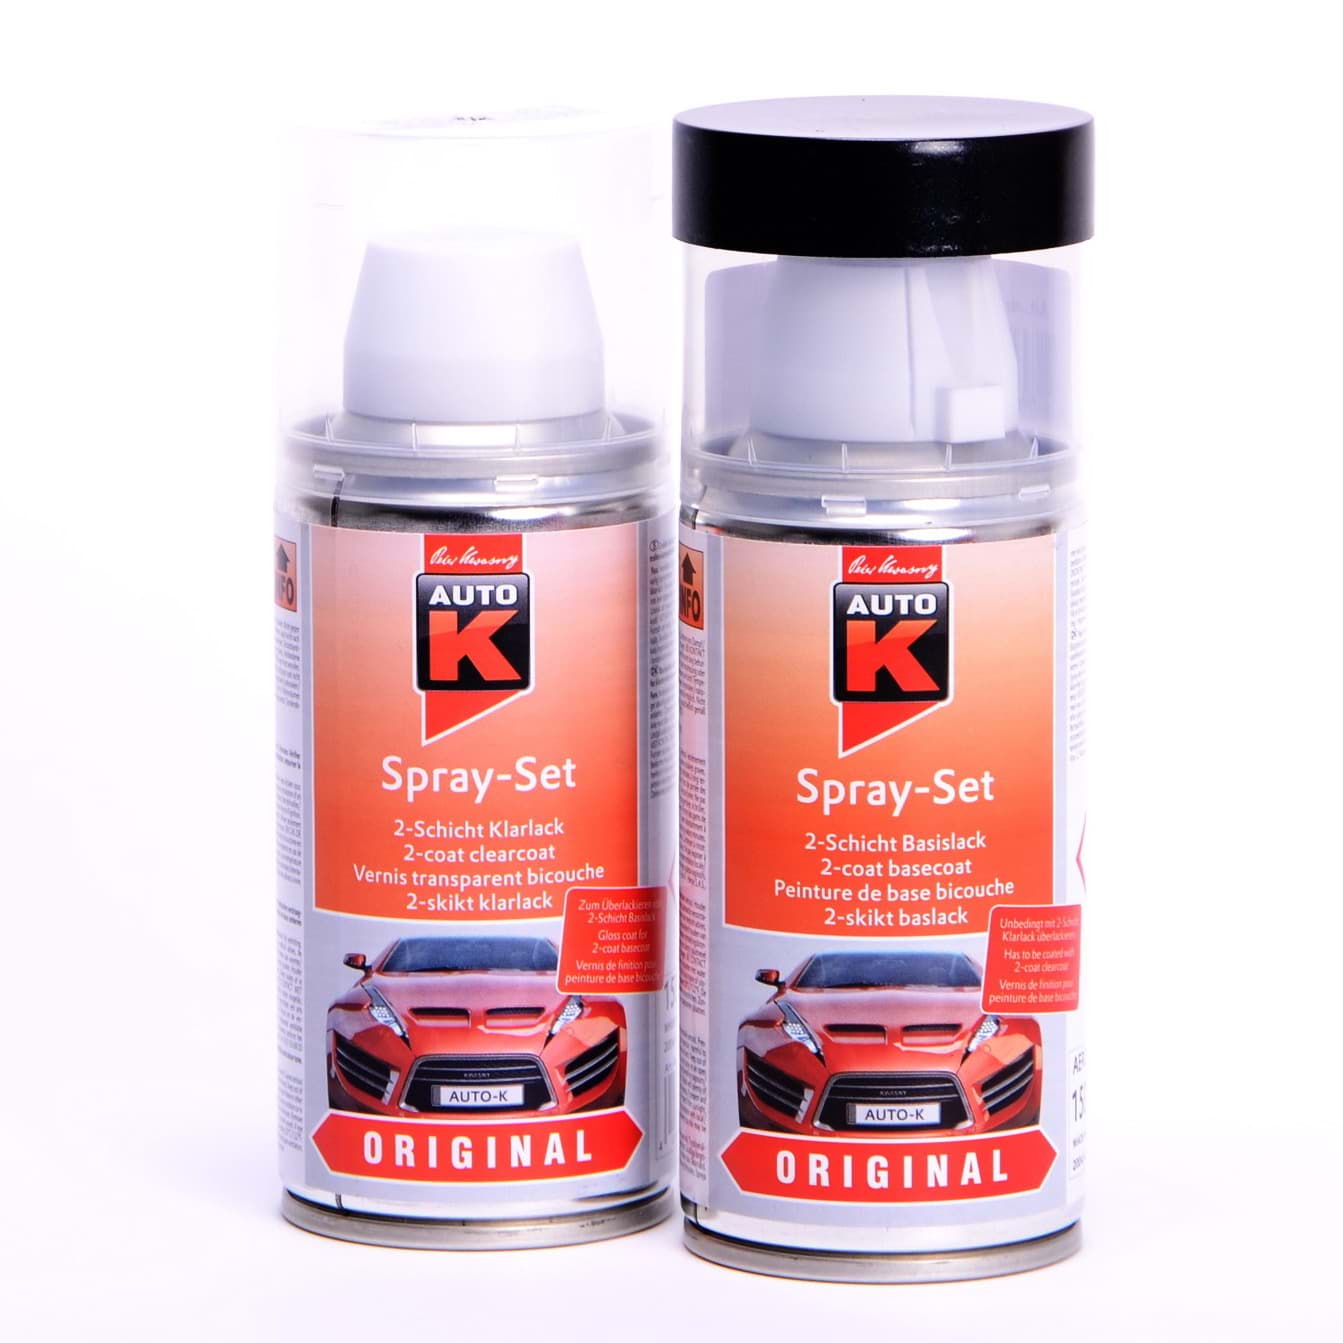 Auto-K Spray-Set Autolack für Opel 179 Silbersee met 21476 resmi